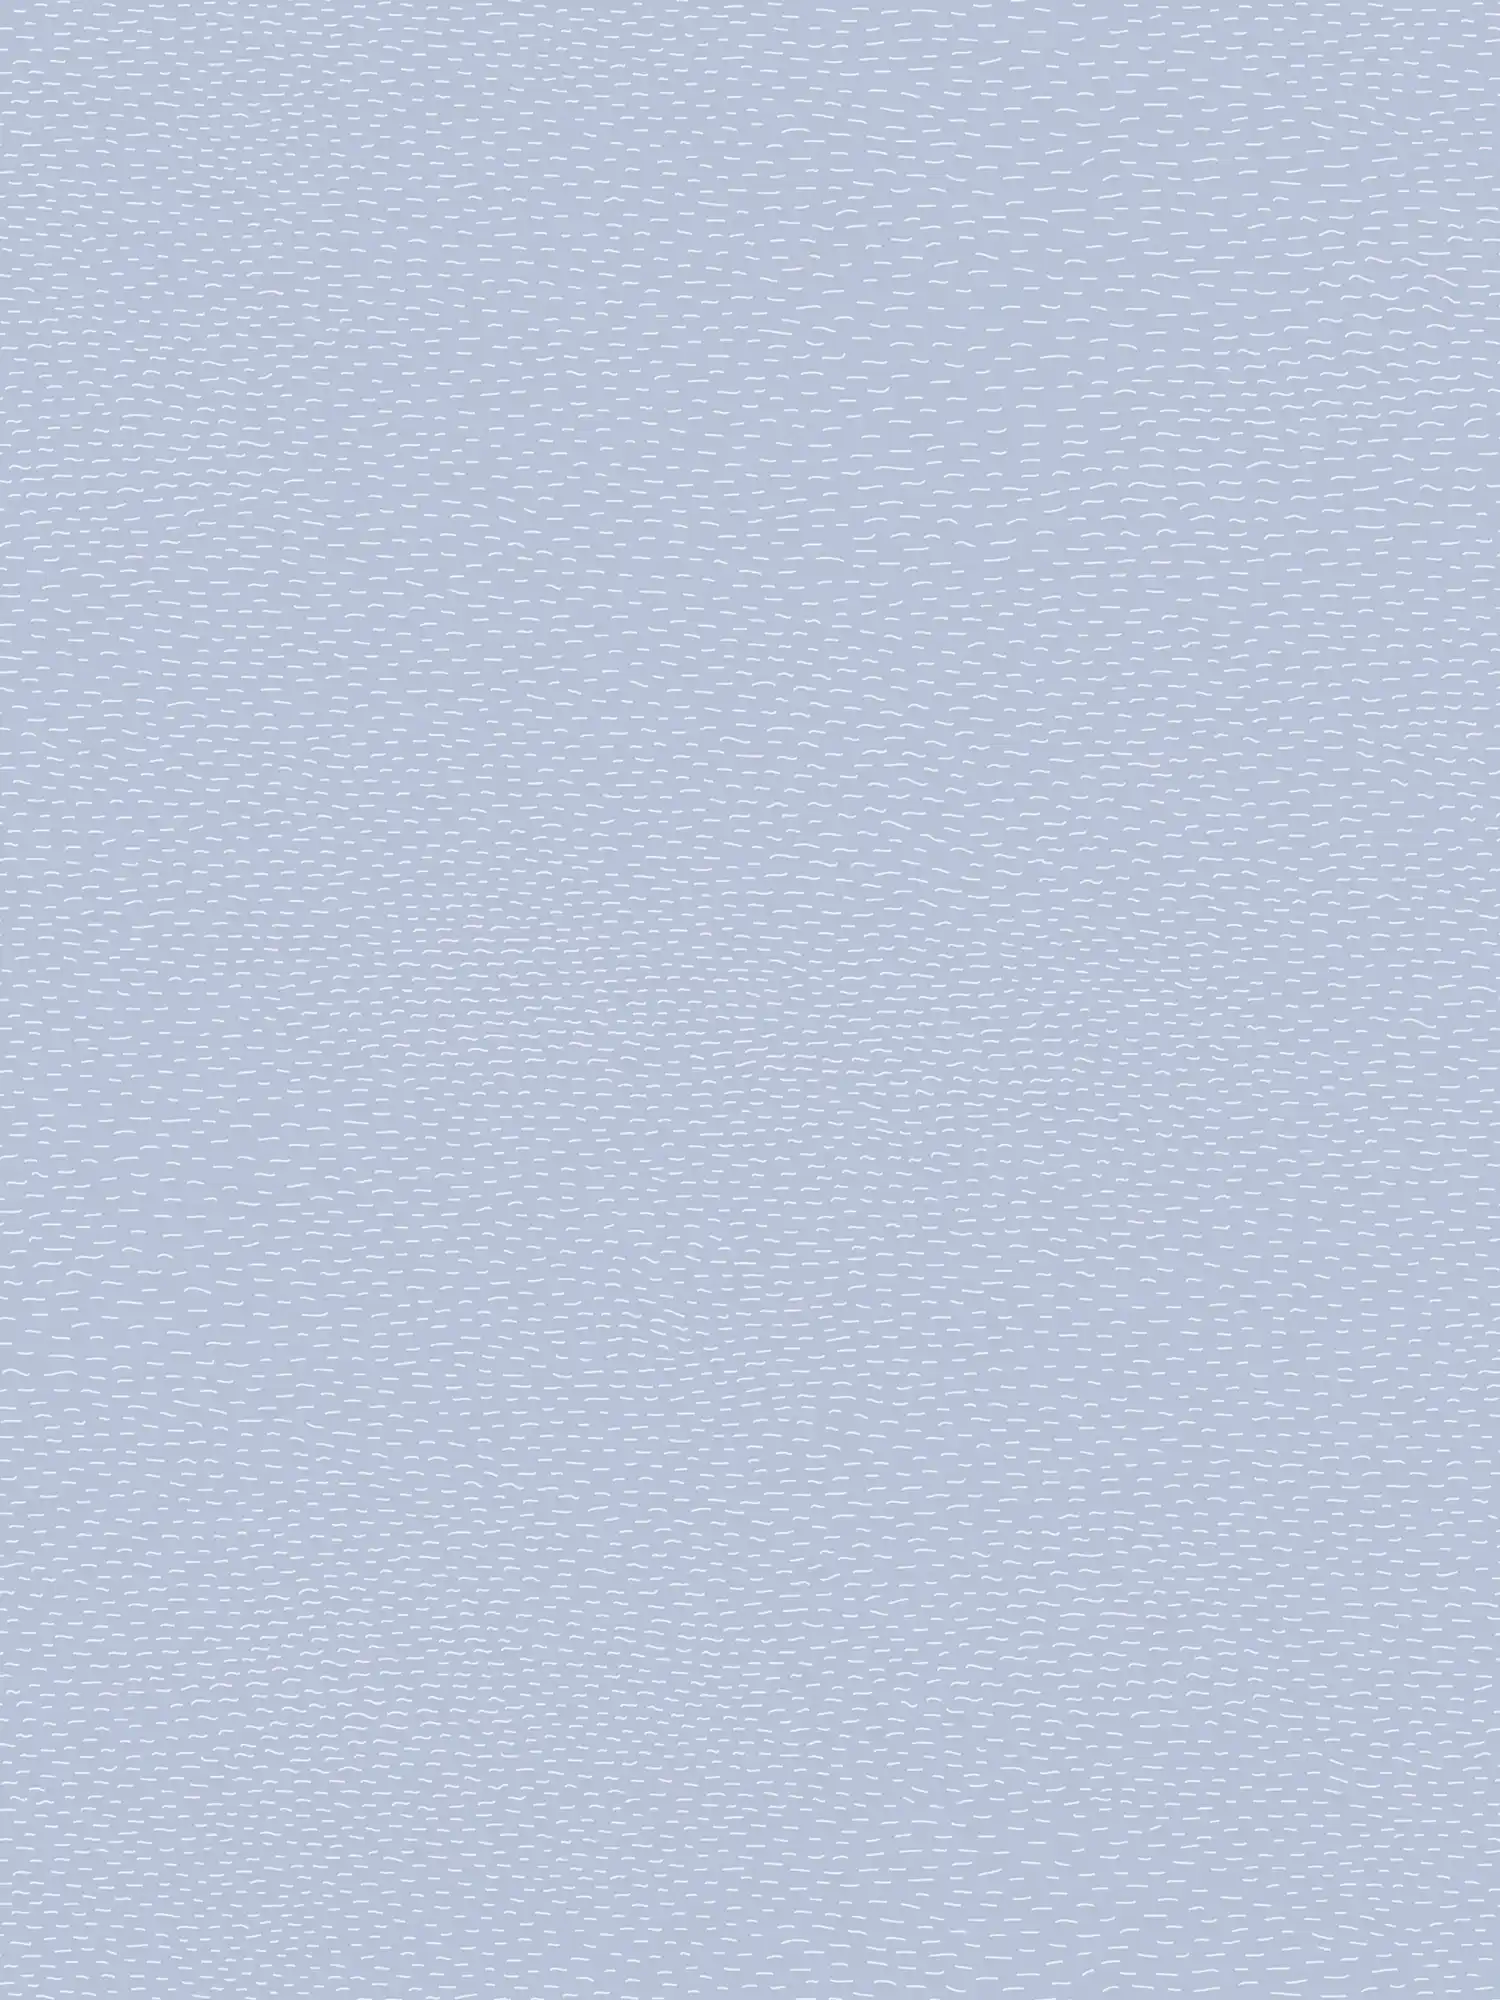 Nursery wallpaper horizontal lines - blue, grey, white
